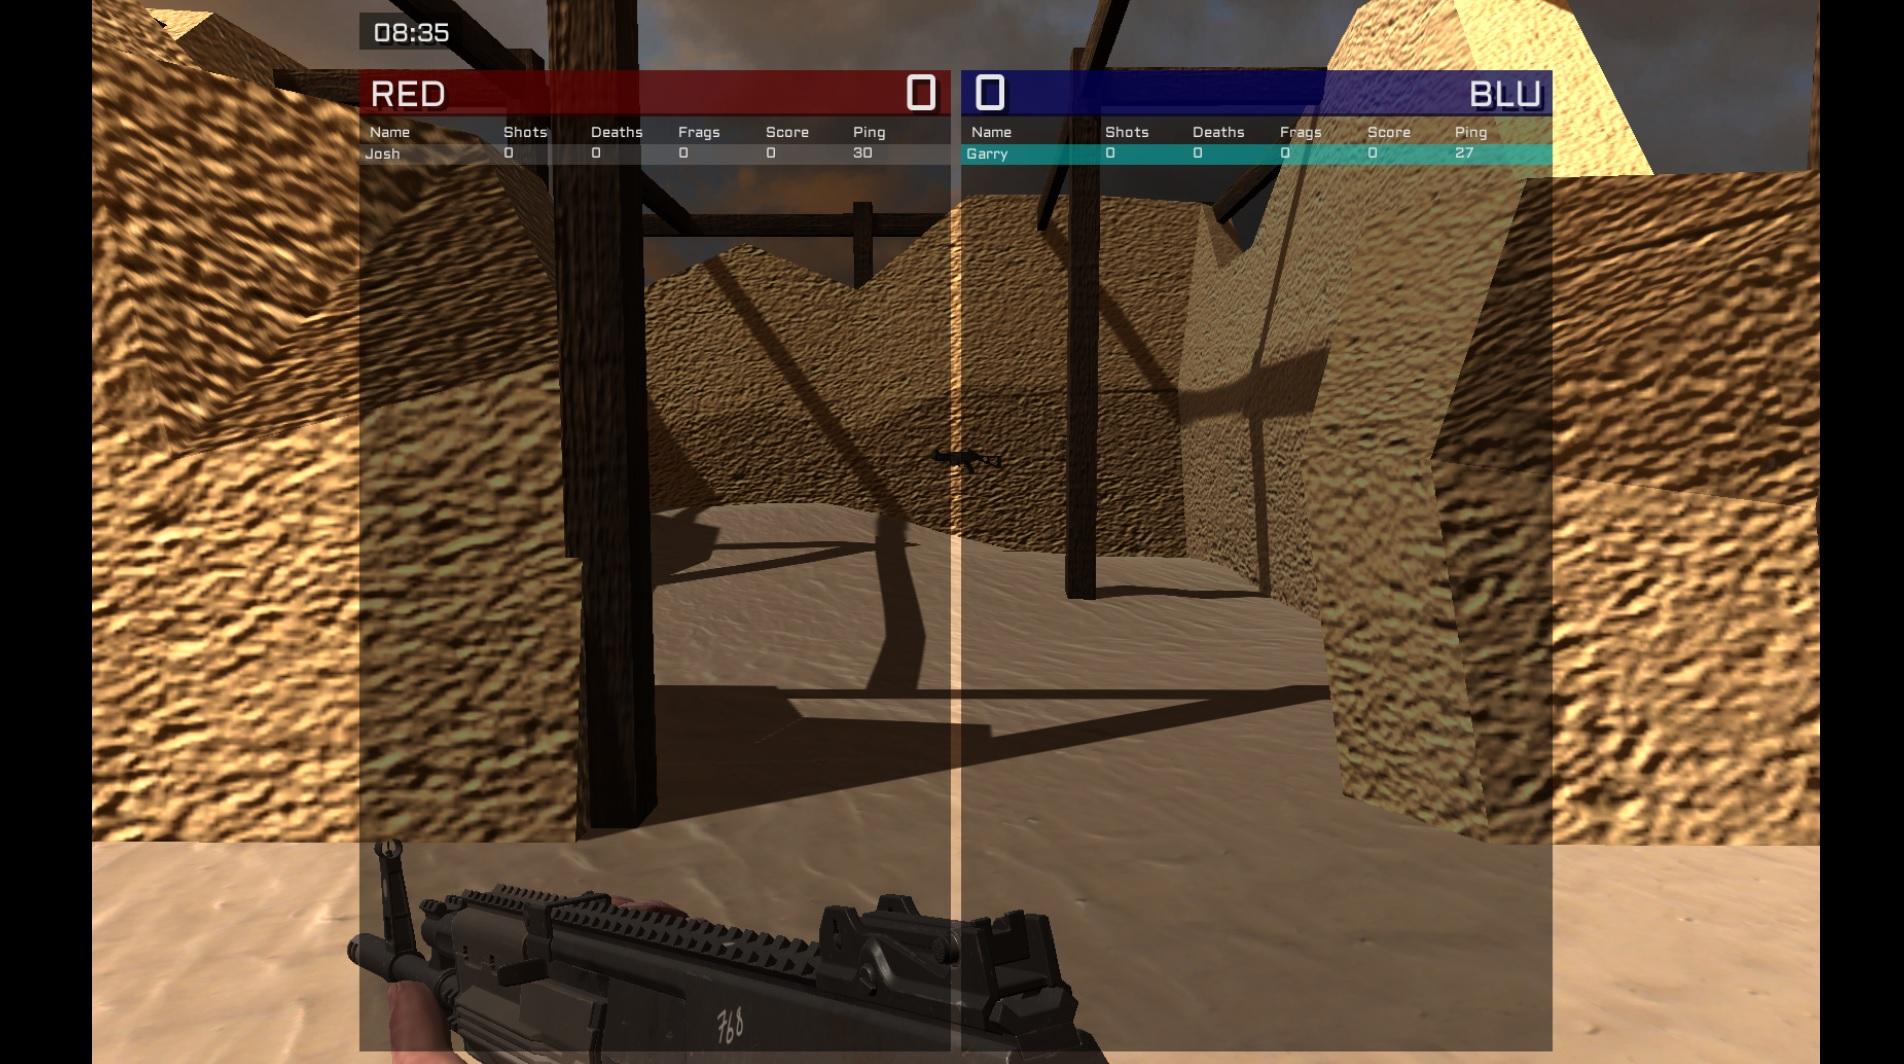 Screenshot №9 from game Killer Elite – Time to Die